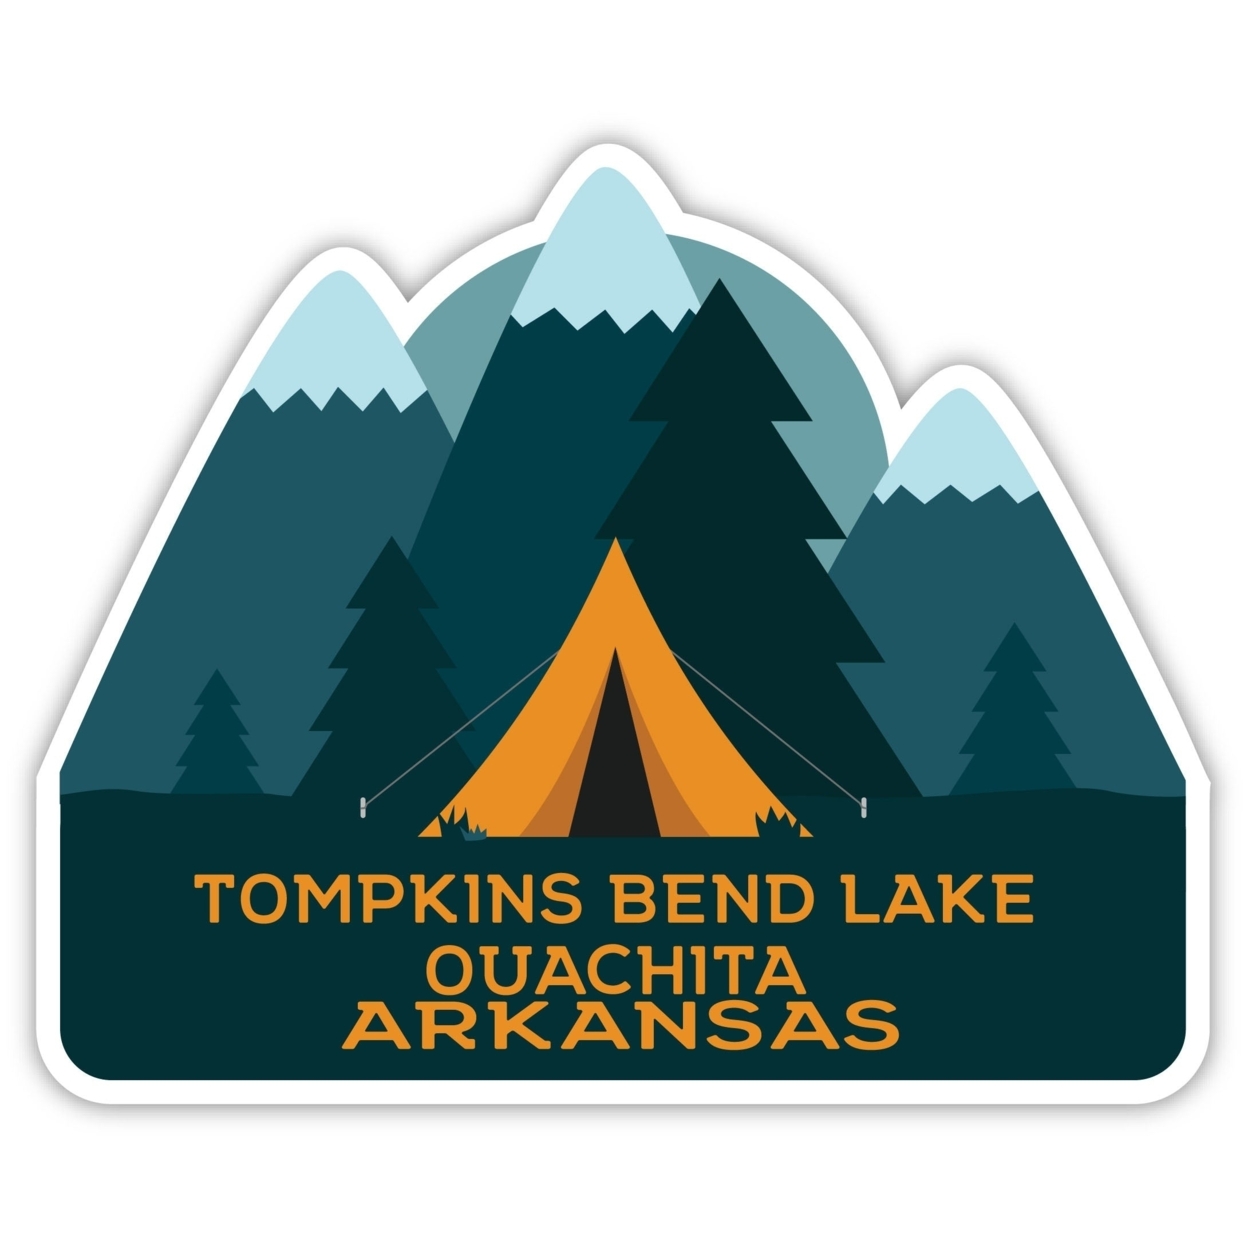 Tompkins Bend Lake Ouachita Arkansas Souvenir Decorative Stickers (Choose Theme And Size) - Single Unit, 2-Inch, Tent